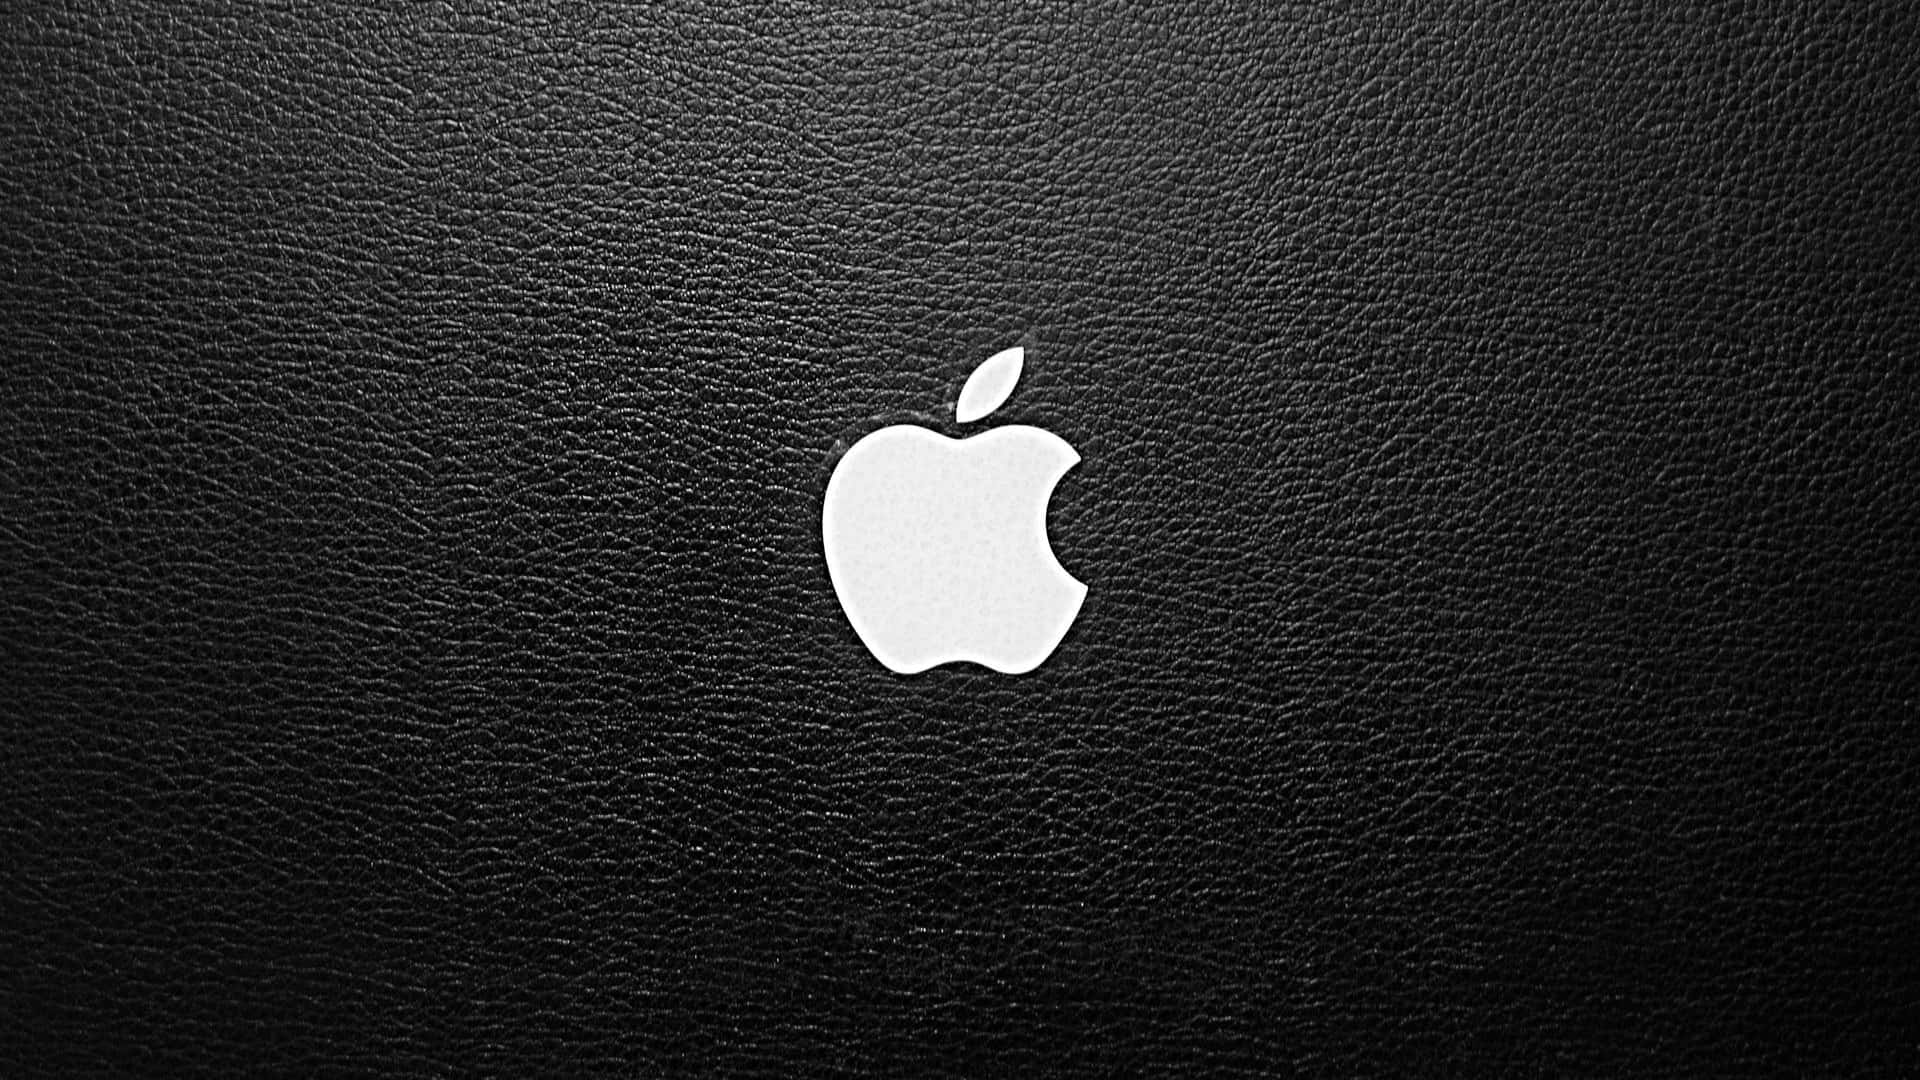 Apple Logo On A Black Leather Background